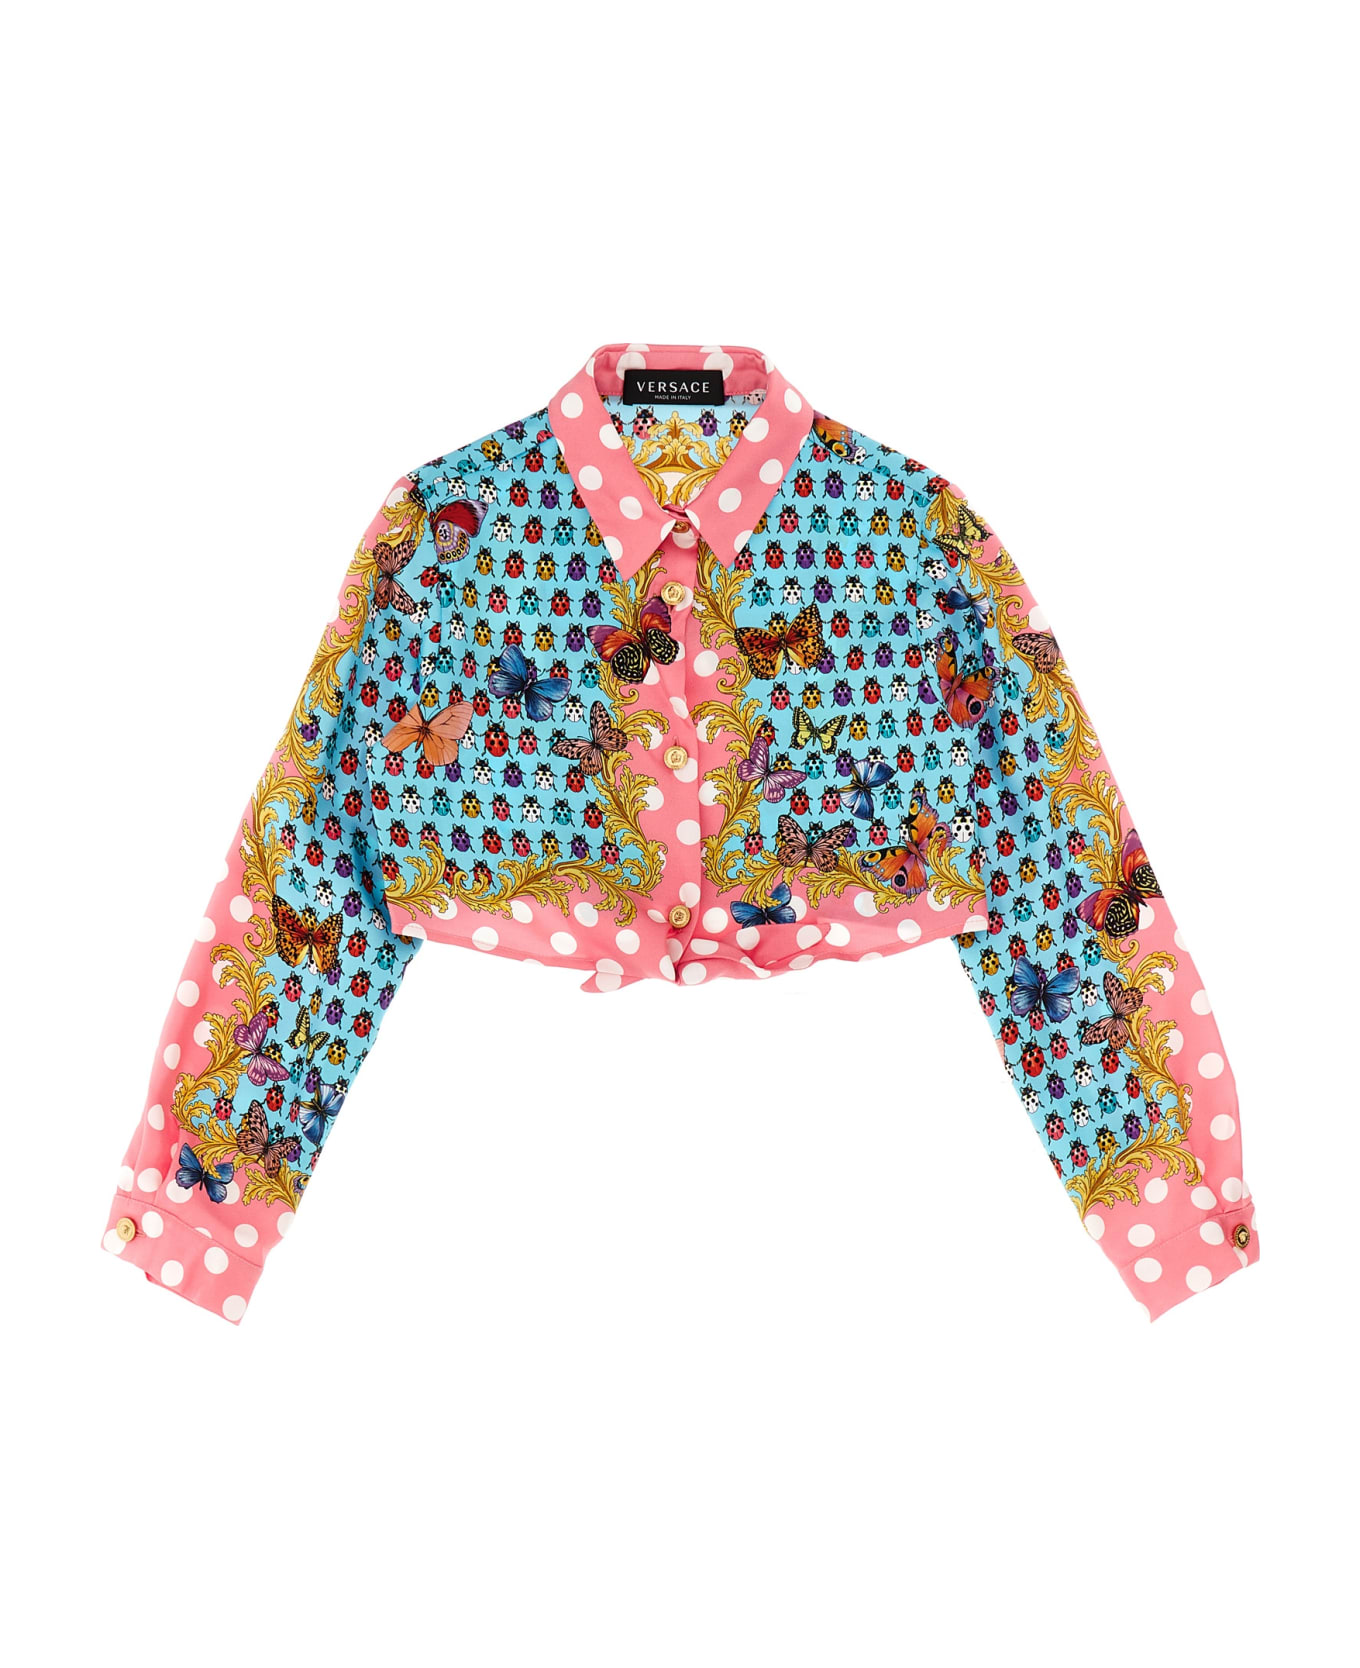 Versace Heritage Butterflies & Ladybugs Kids' La Vacanza Capsule Shirt - Multicolor シャツ